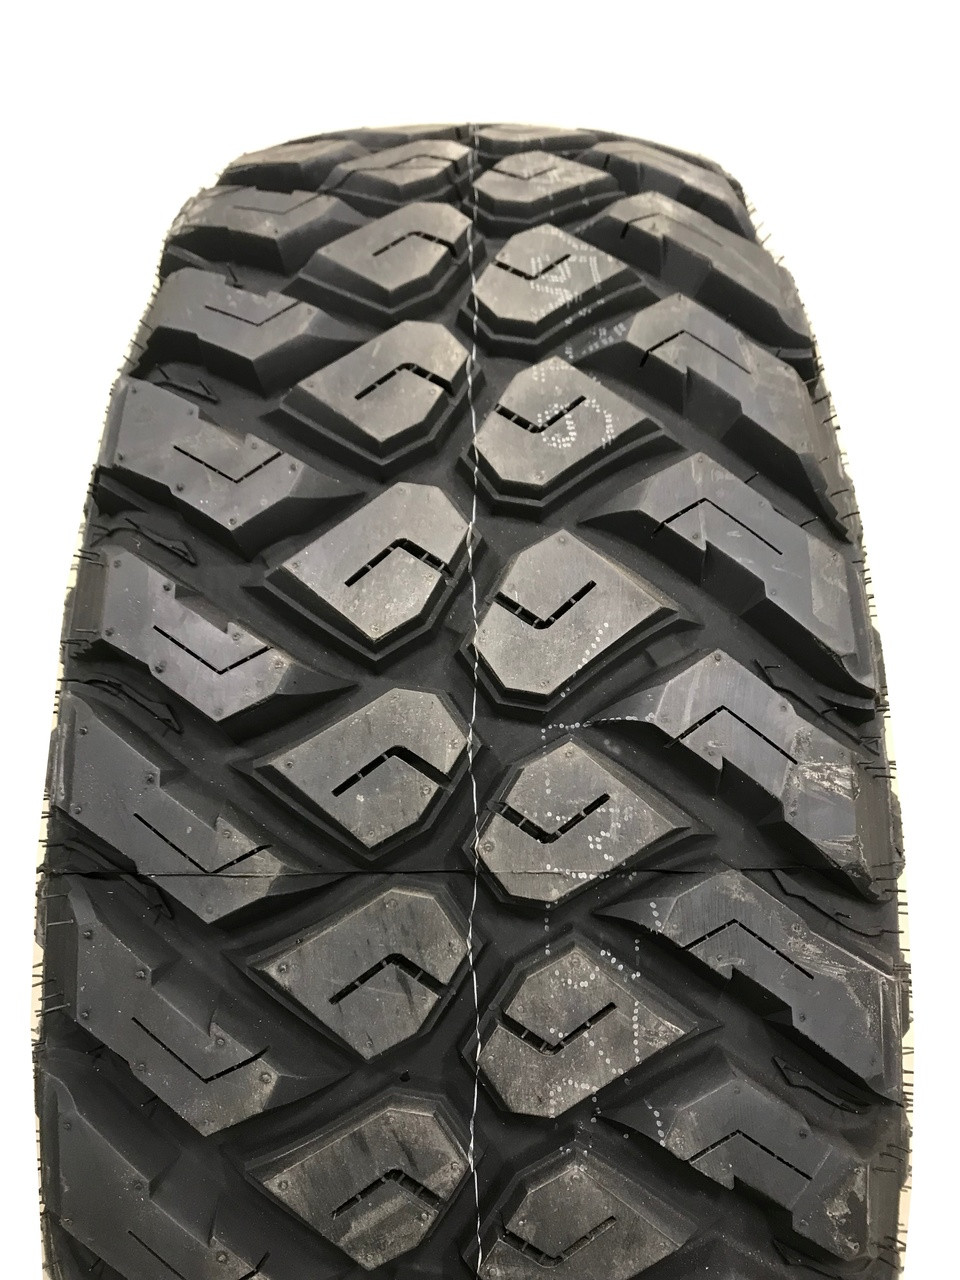 New Tire 265 75 16 Maxxis Razr MT Mud 10 Ply LT265/75R16 40,000 Mile Warranty